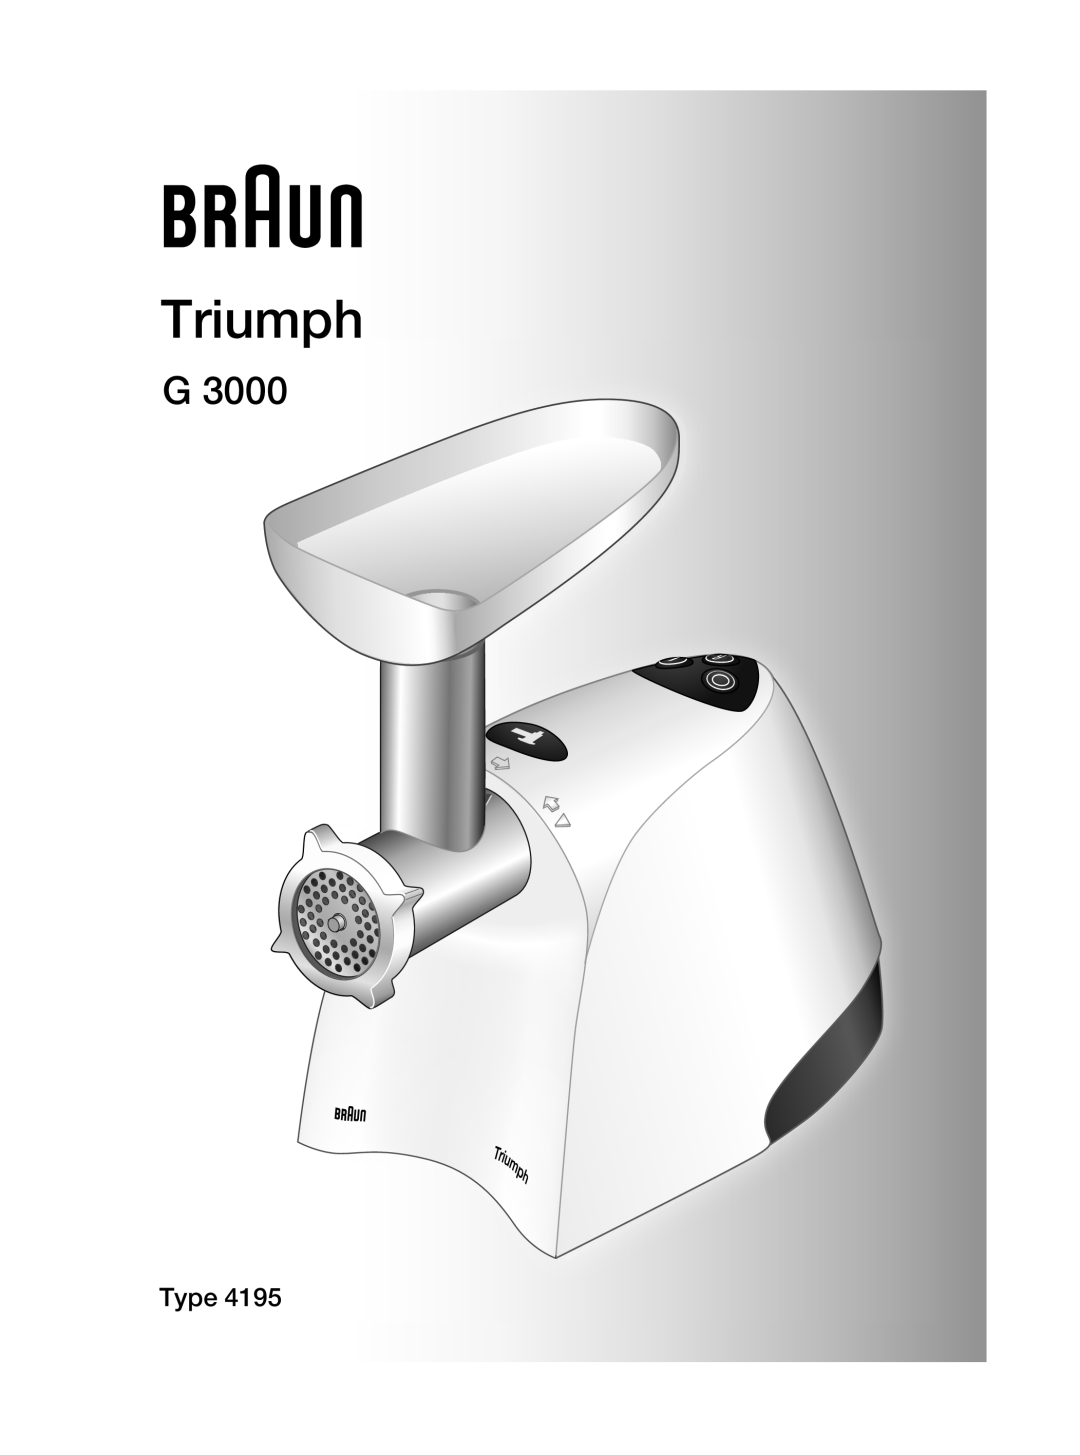 Braun G 3000 manual Type, Triumph 